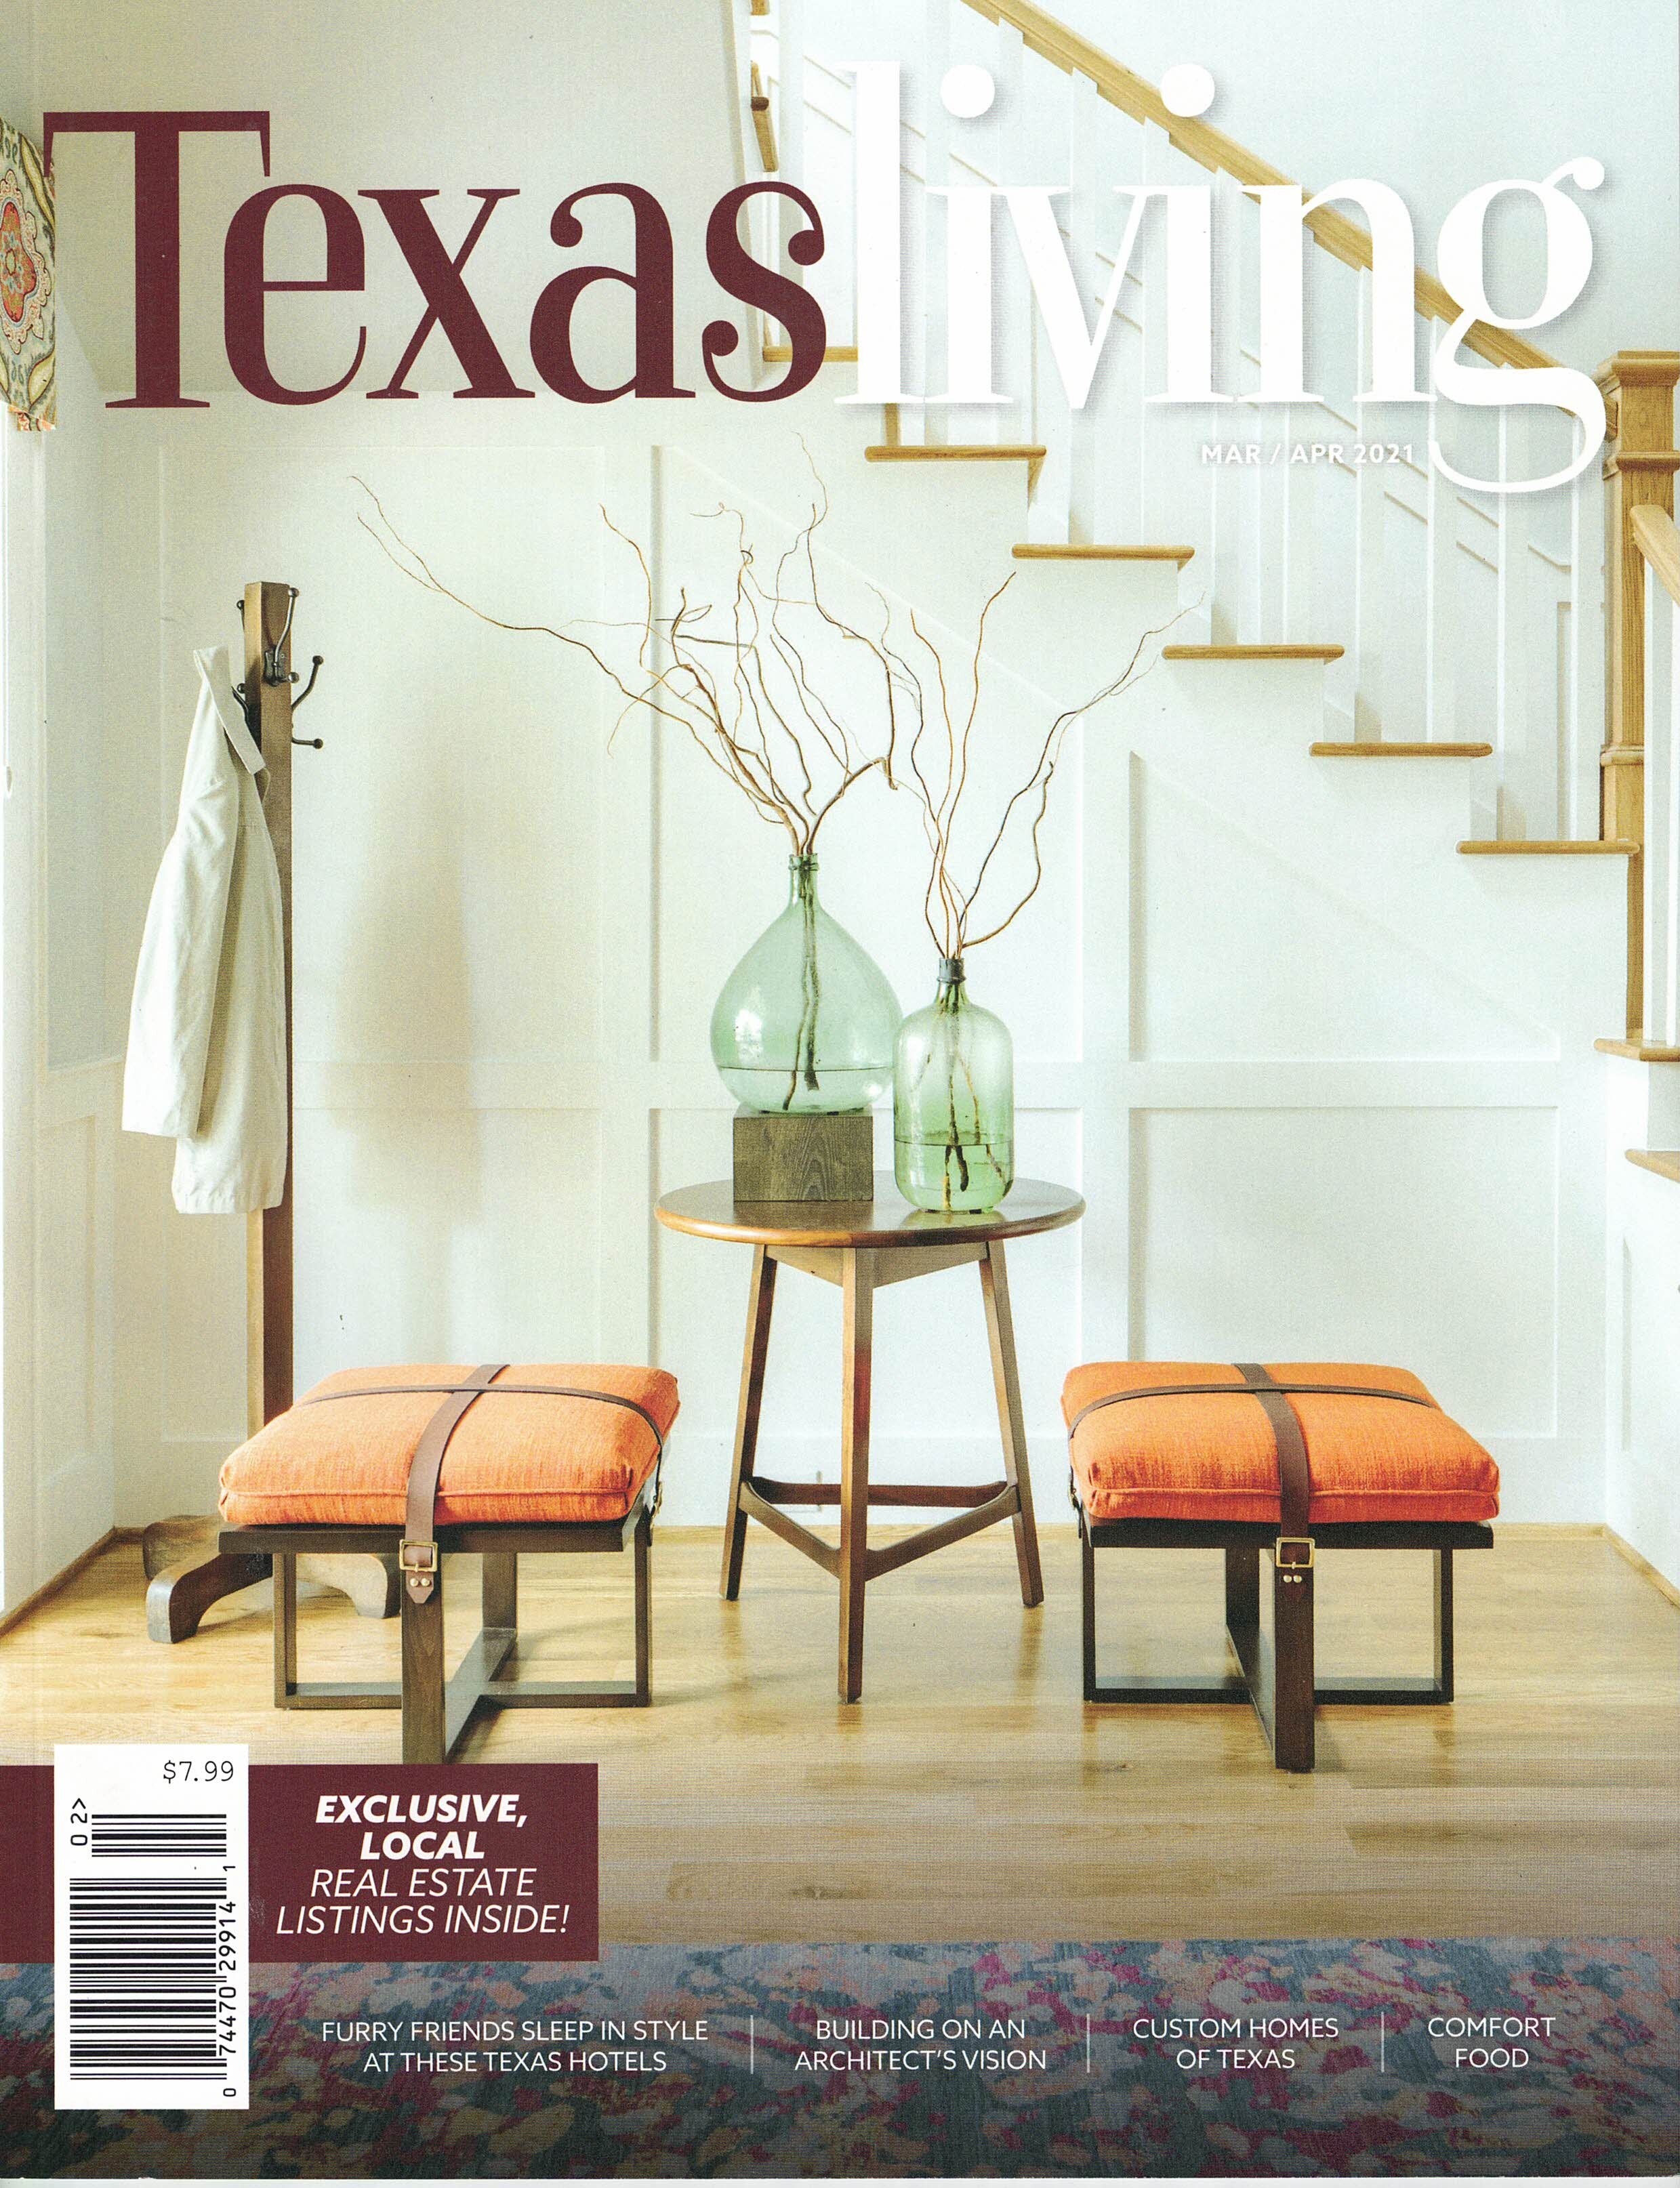 Texas Living article 3-4 2021 cover Nelson.jpg